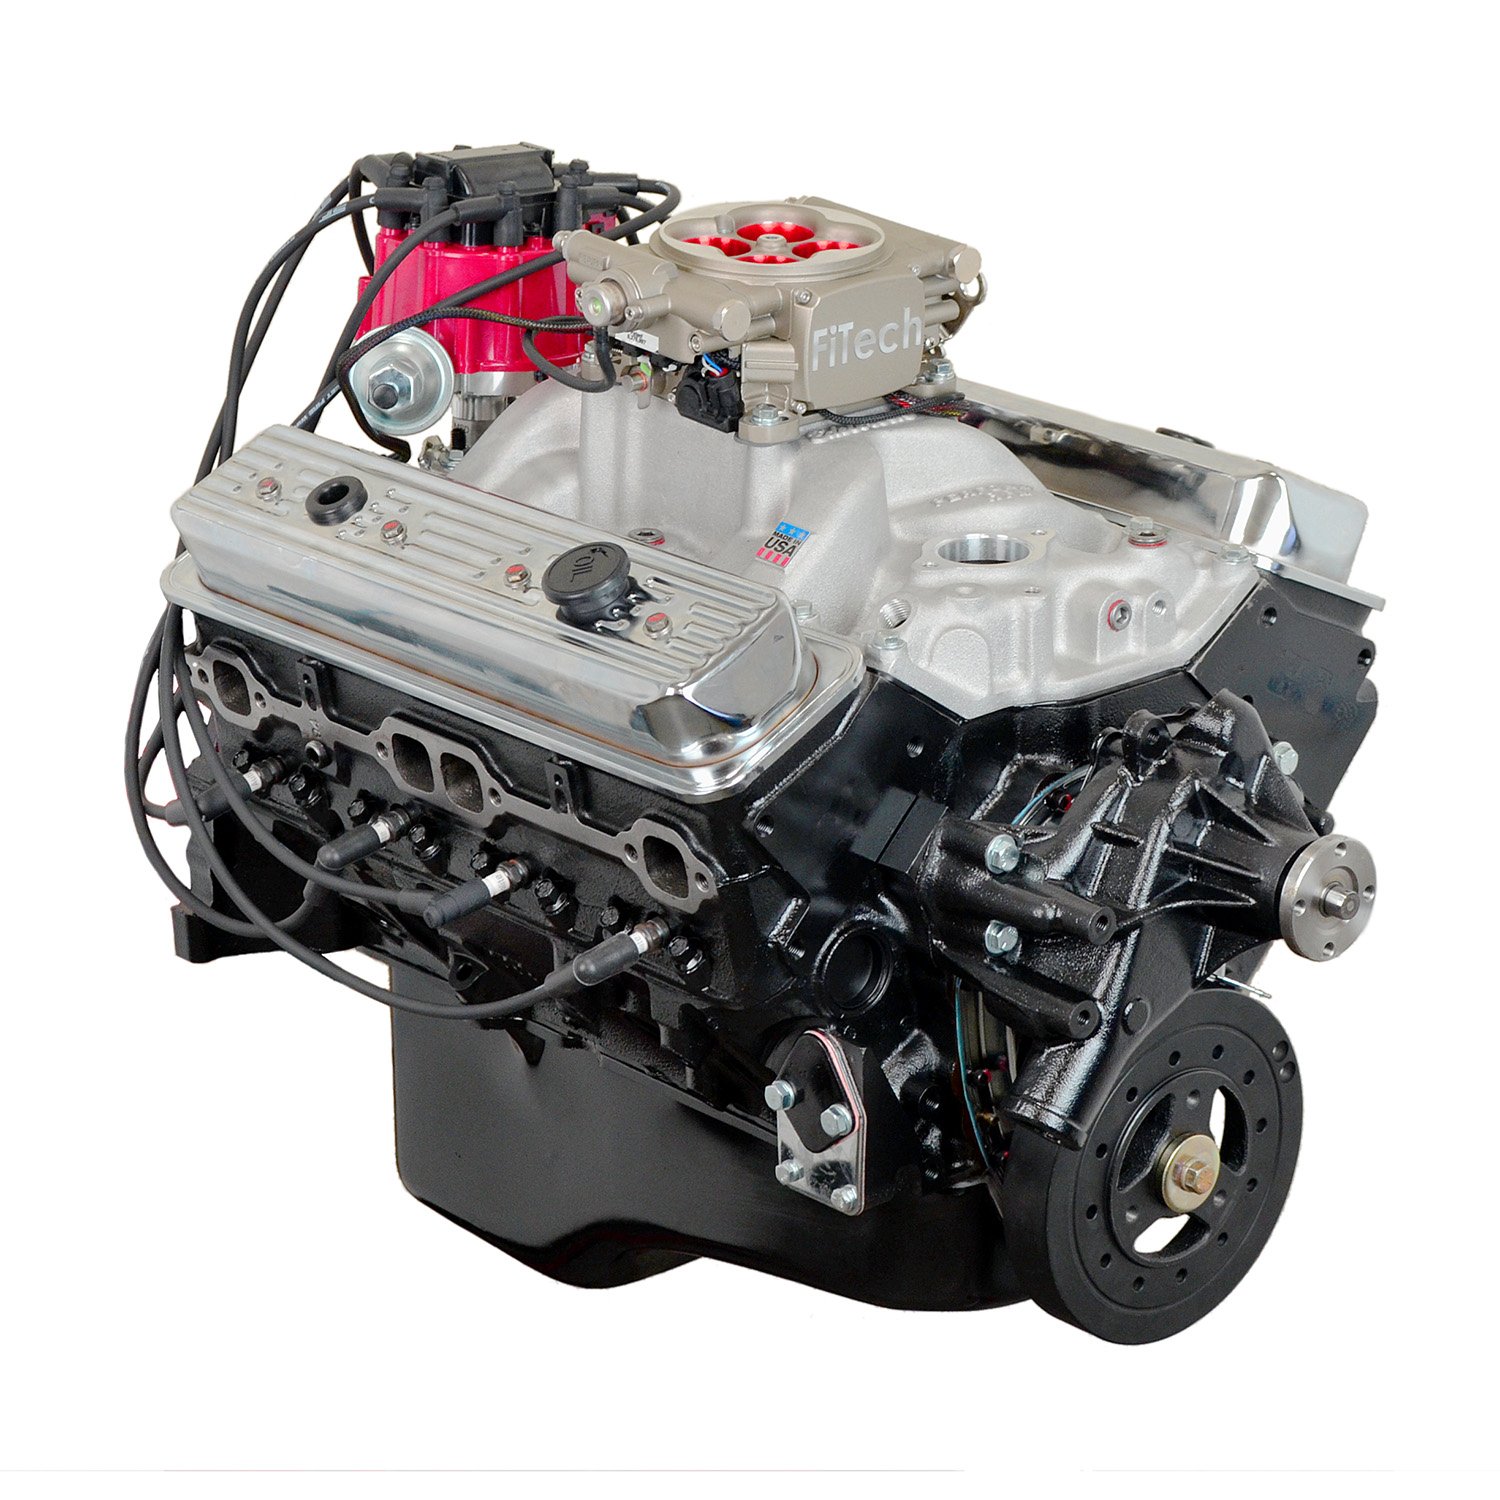 HP32C-EFI High Performance Crate Engine Small Block Chevy 350ci / 350HP / 400TQ